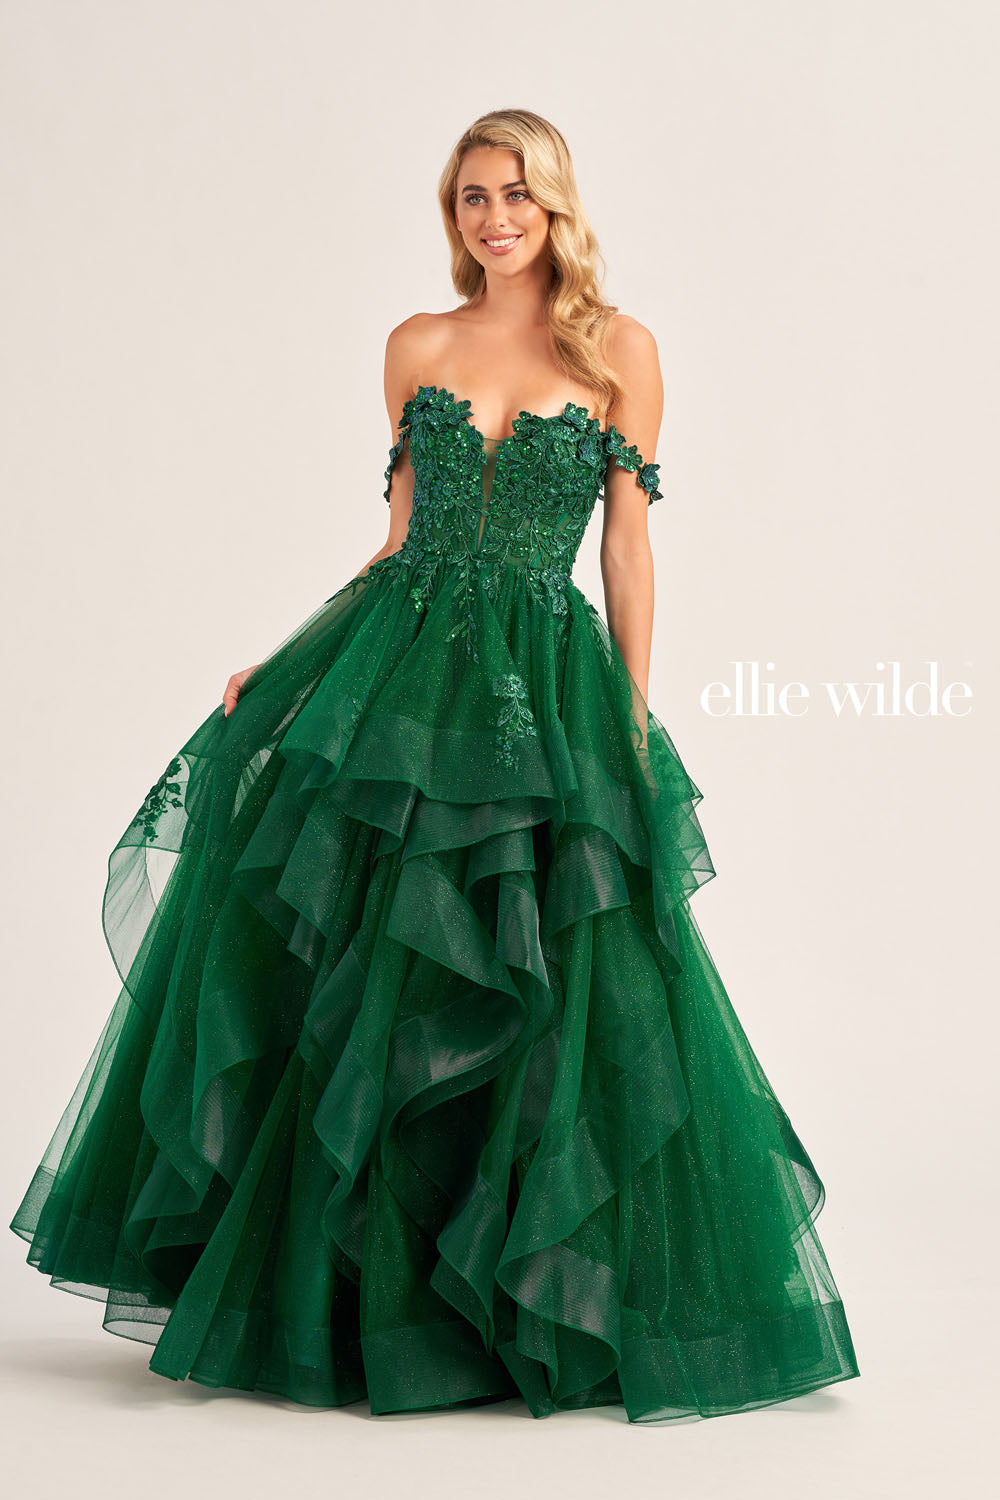 Shiny Teal Green Dress - Sequin Dress - Lace-Up Maxi Dress - Lulus